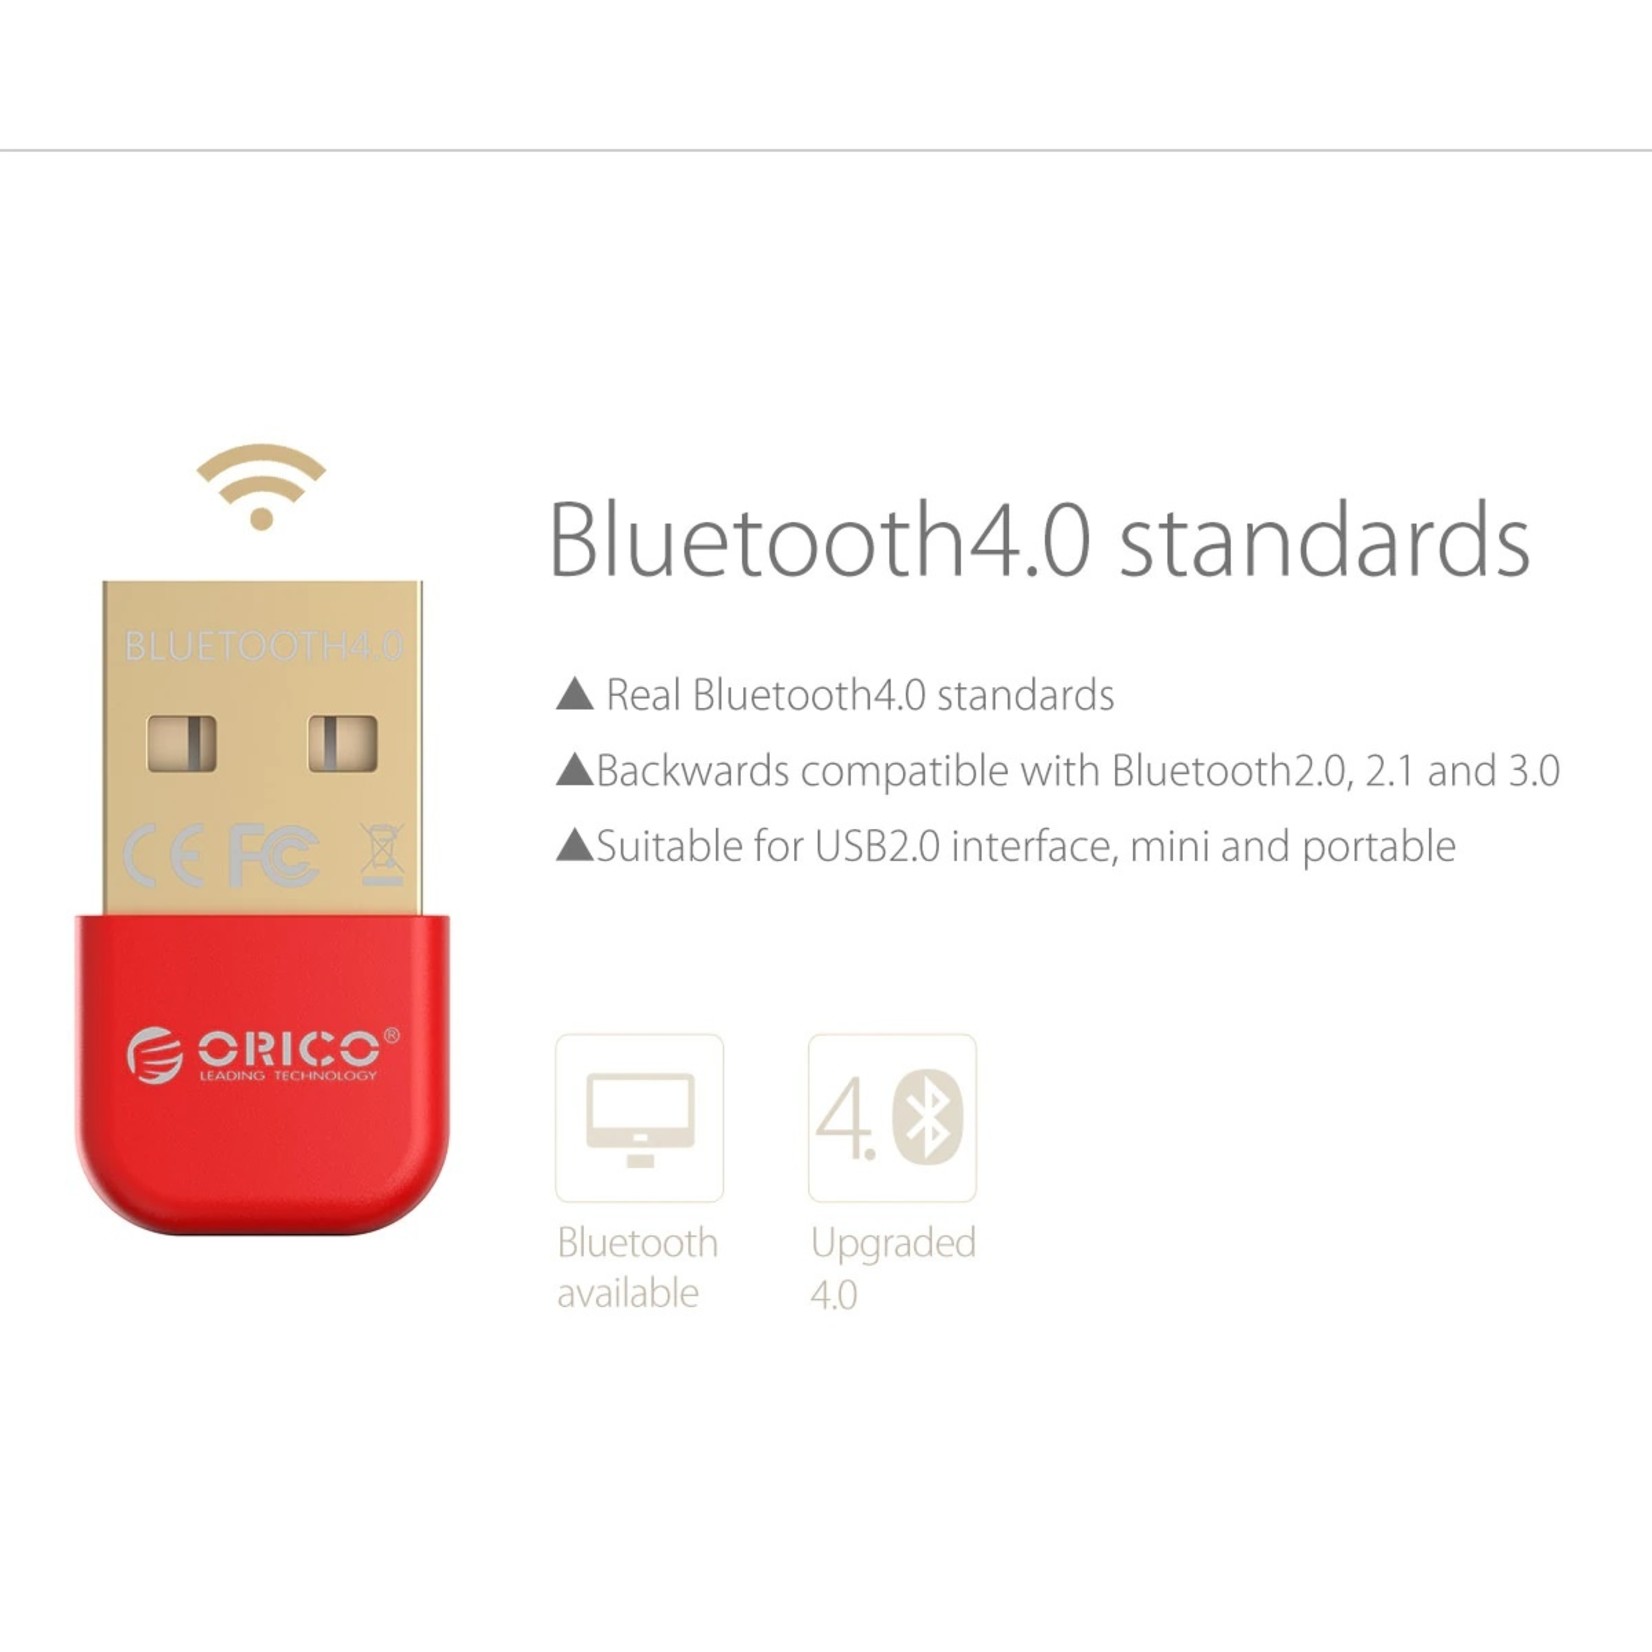 Orico - USB Bluetooth 4.0 Adapter - 20m